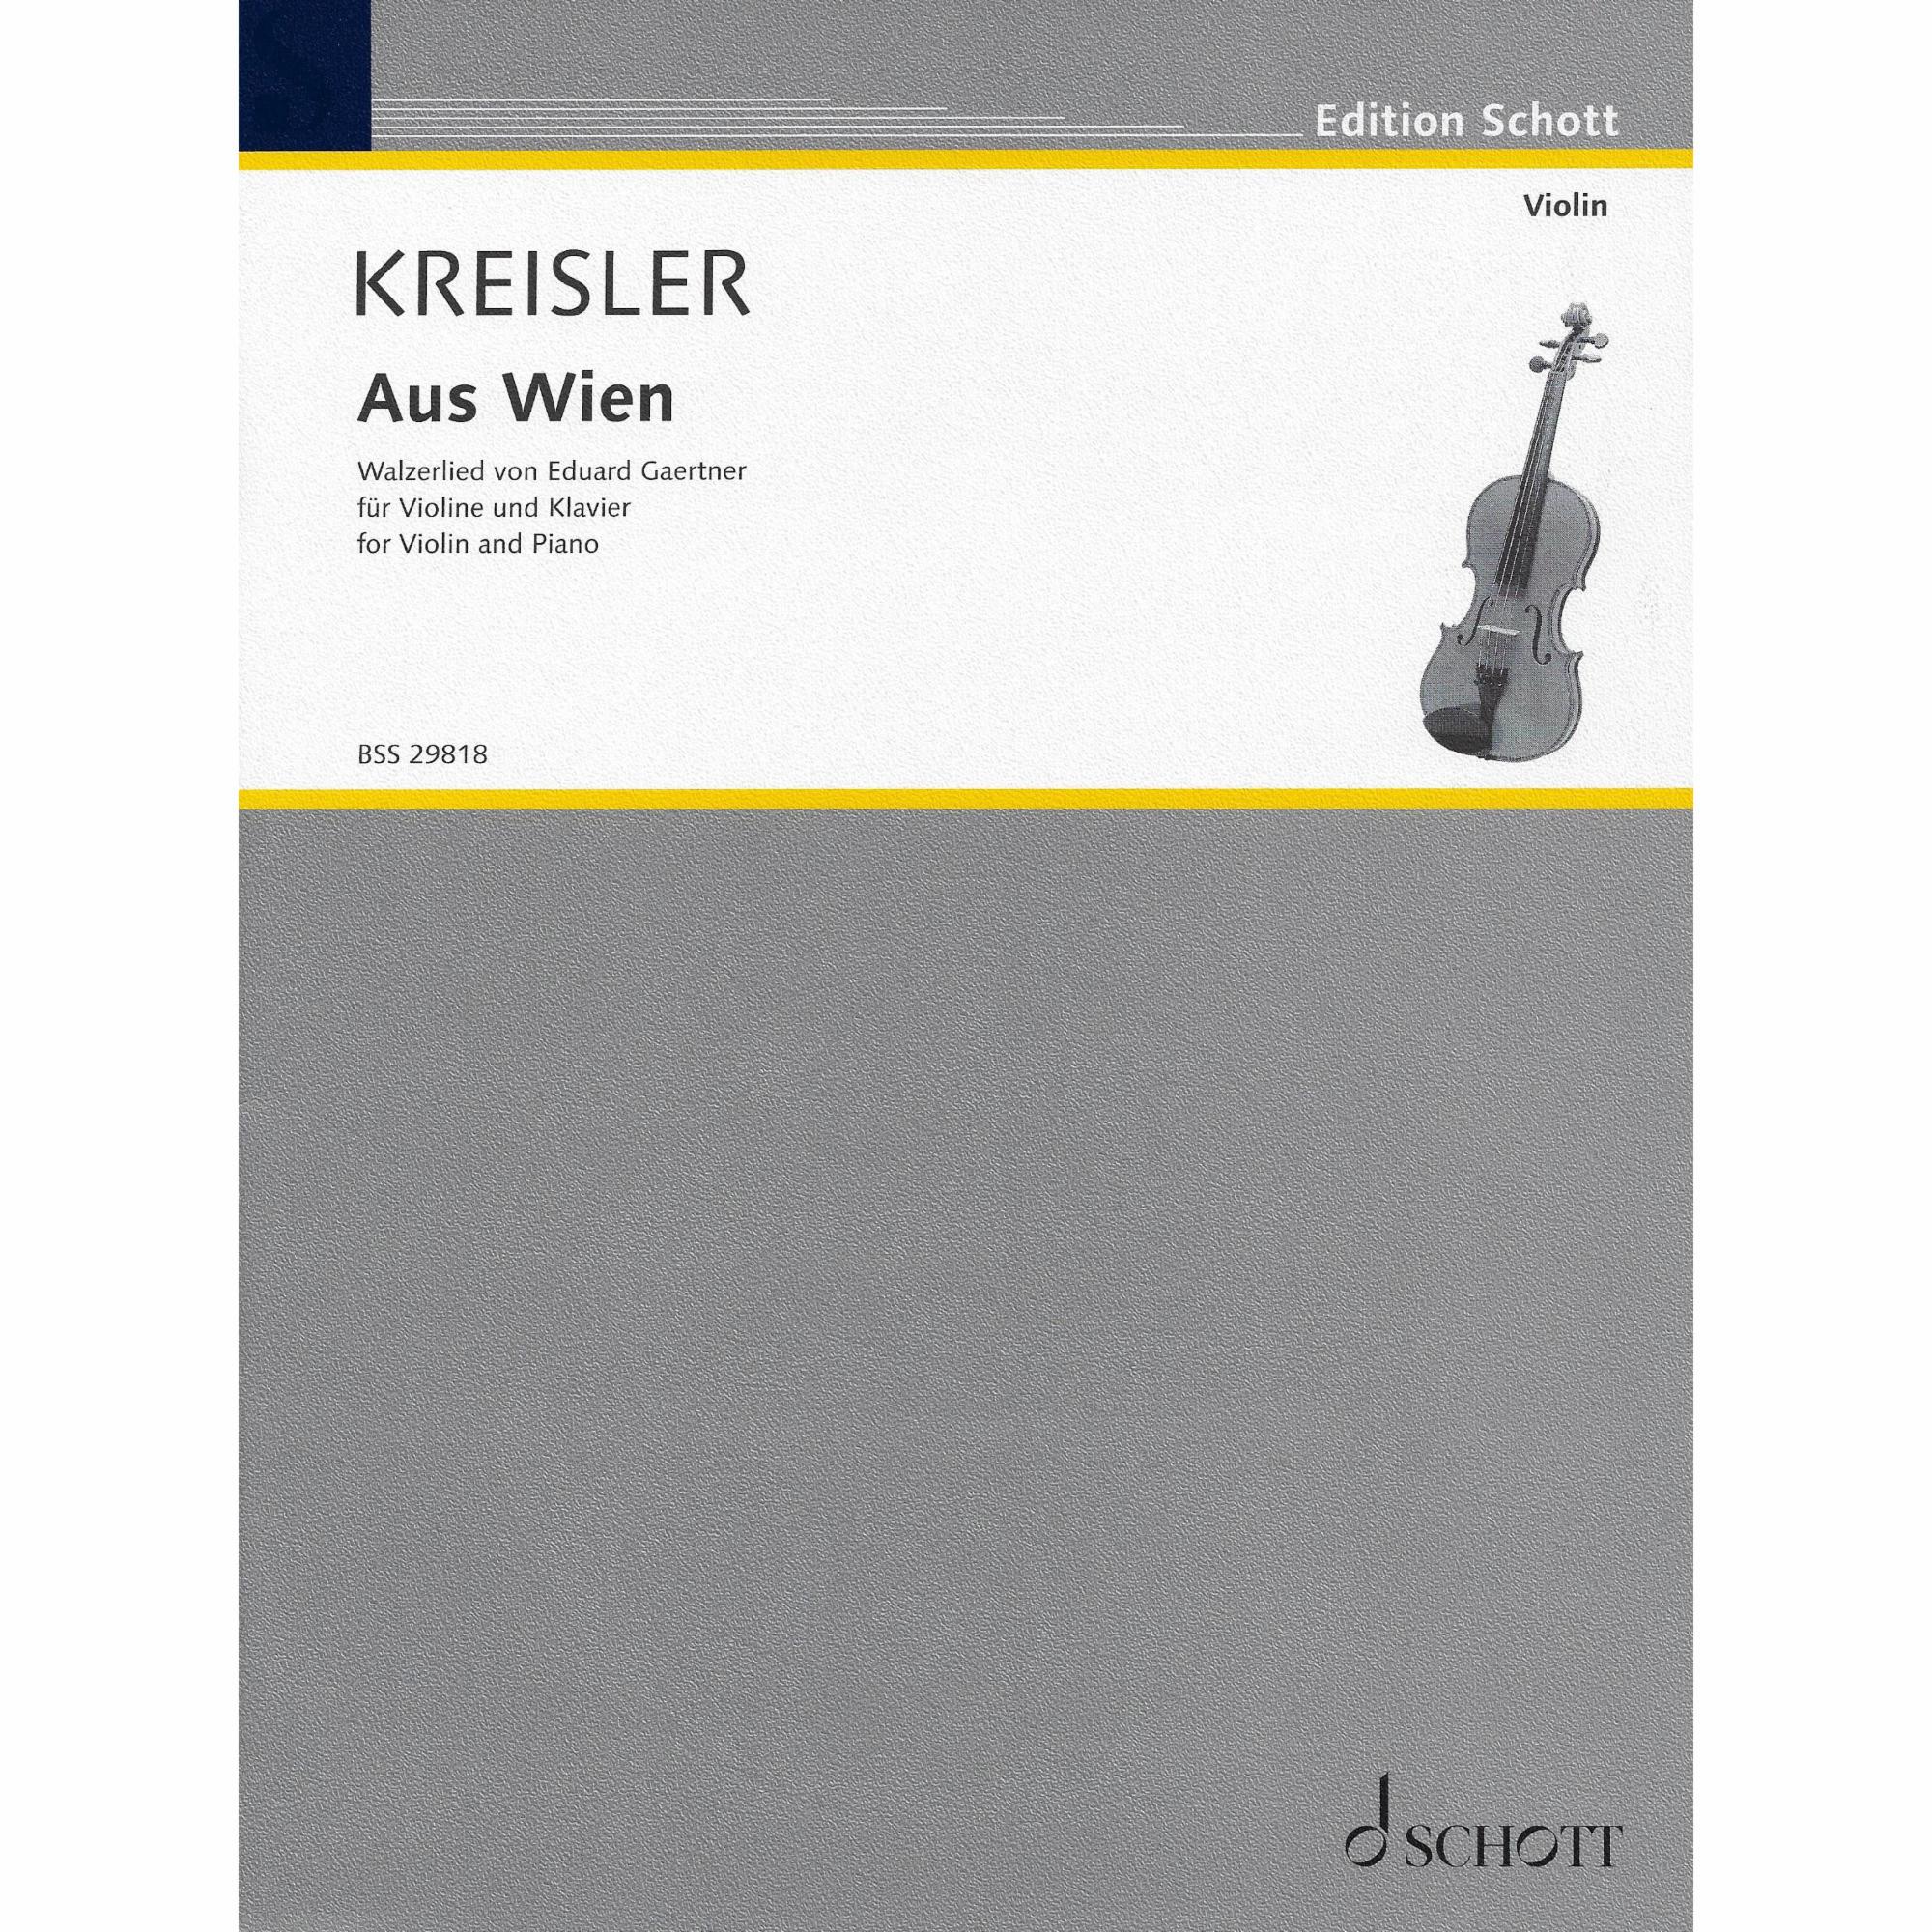 Kreisler -- Aus Wien for Violin and Piano